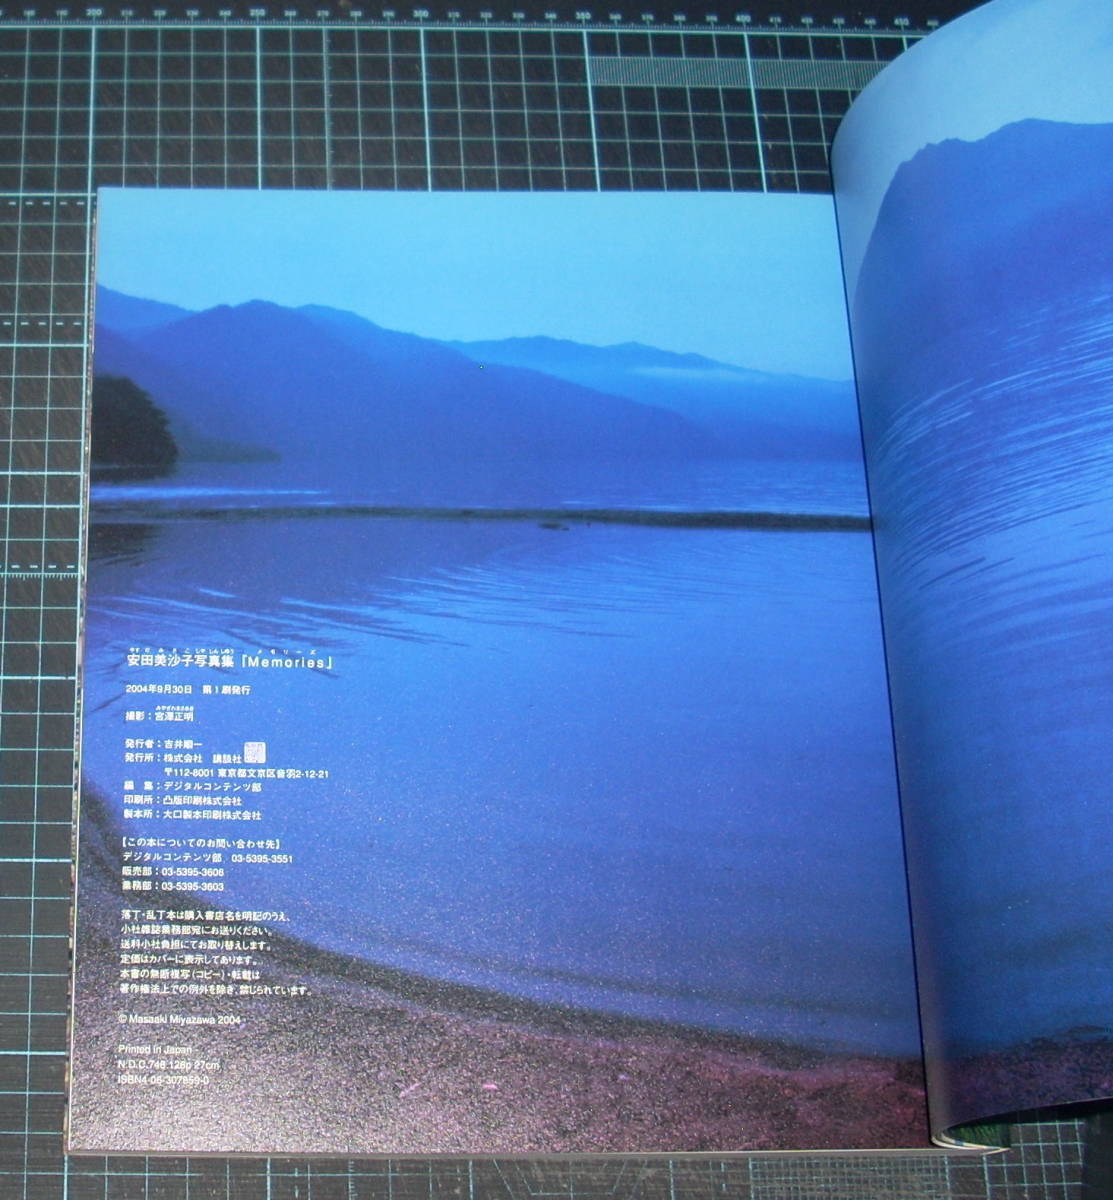 EBA! prompt decision. Yasuda Misako |.. regular Akira photographing Yasuda Misako photoalbum Memories.. company 